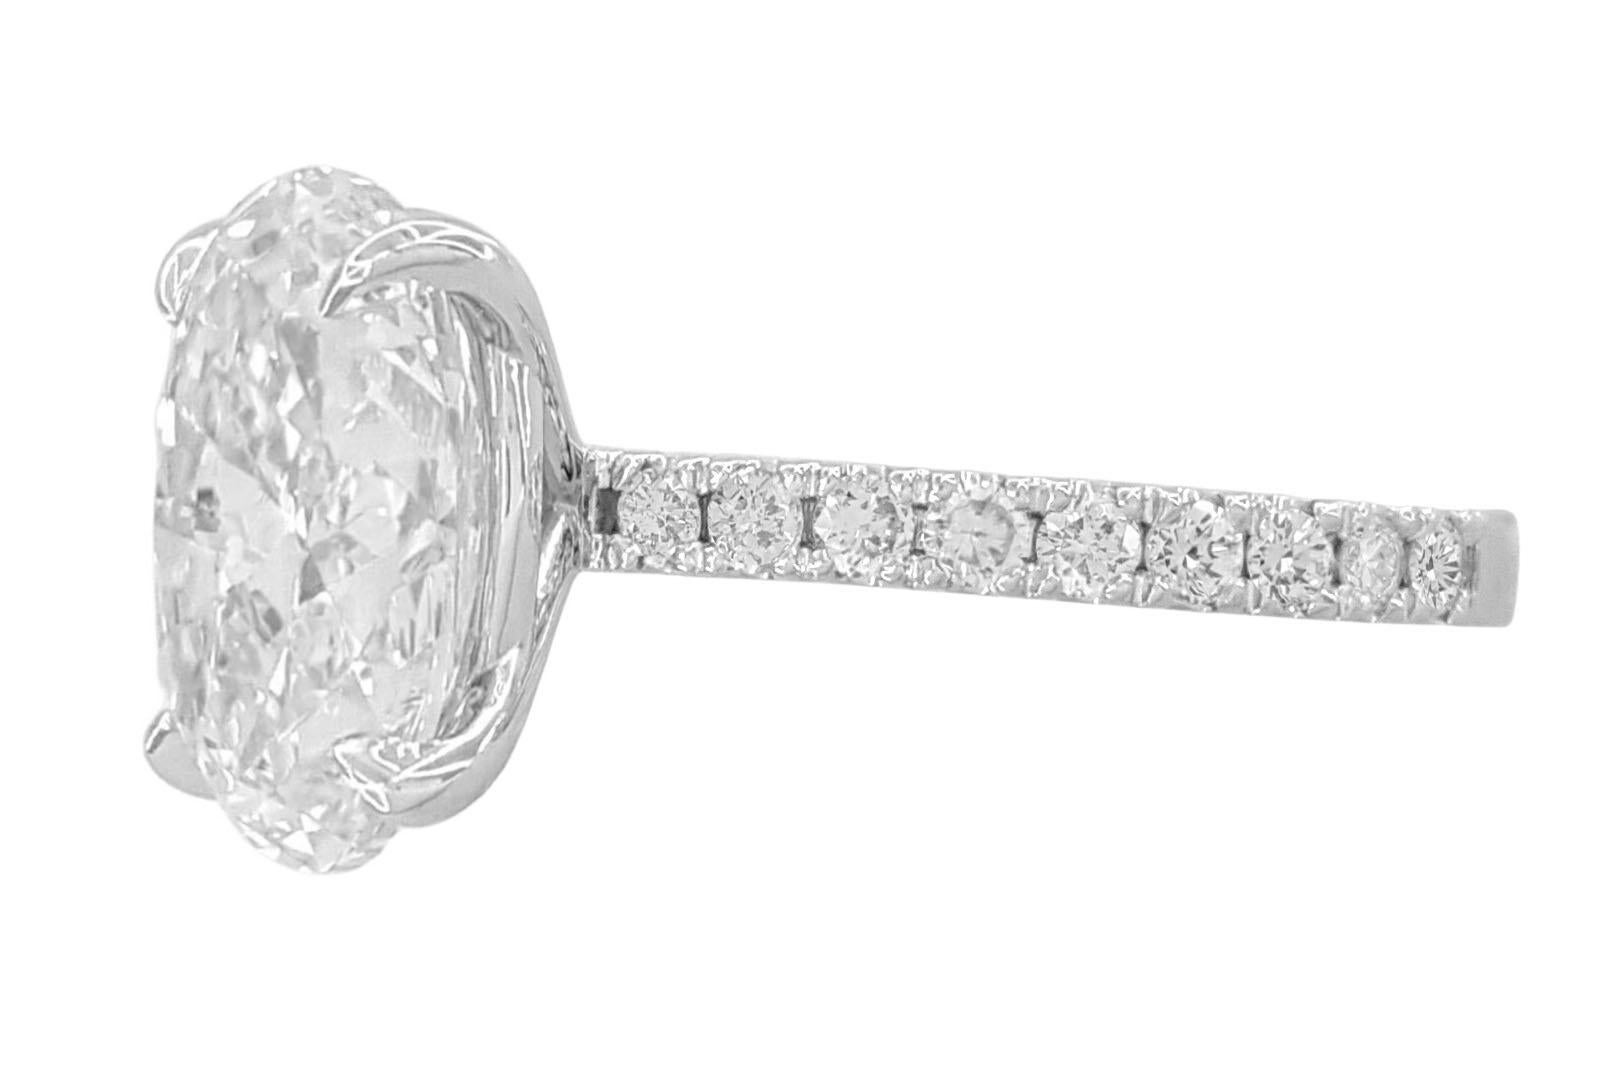 Oval Cut GIA 4 Ct E Color VS Clarity Oval Brilliant Cut Diamond 18K White Gold Ring  For Sale